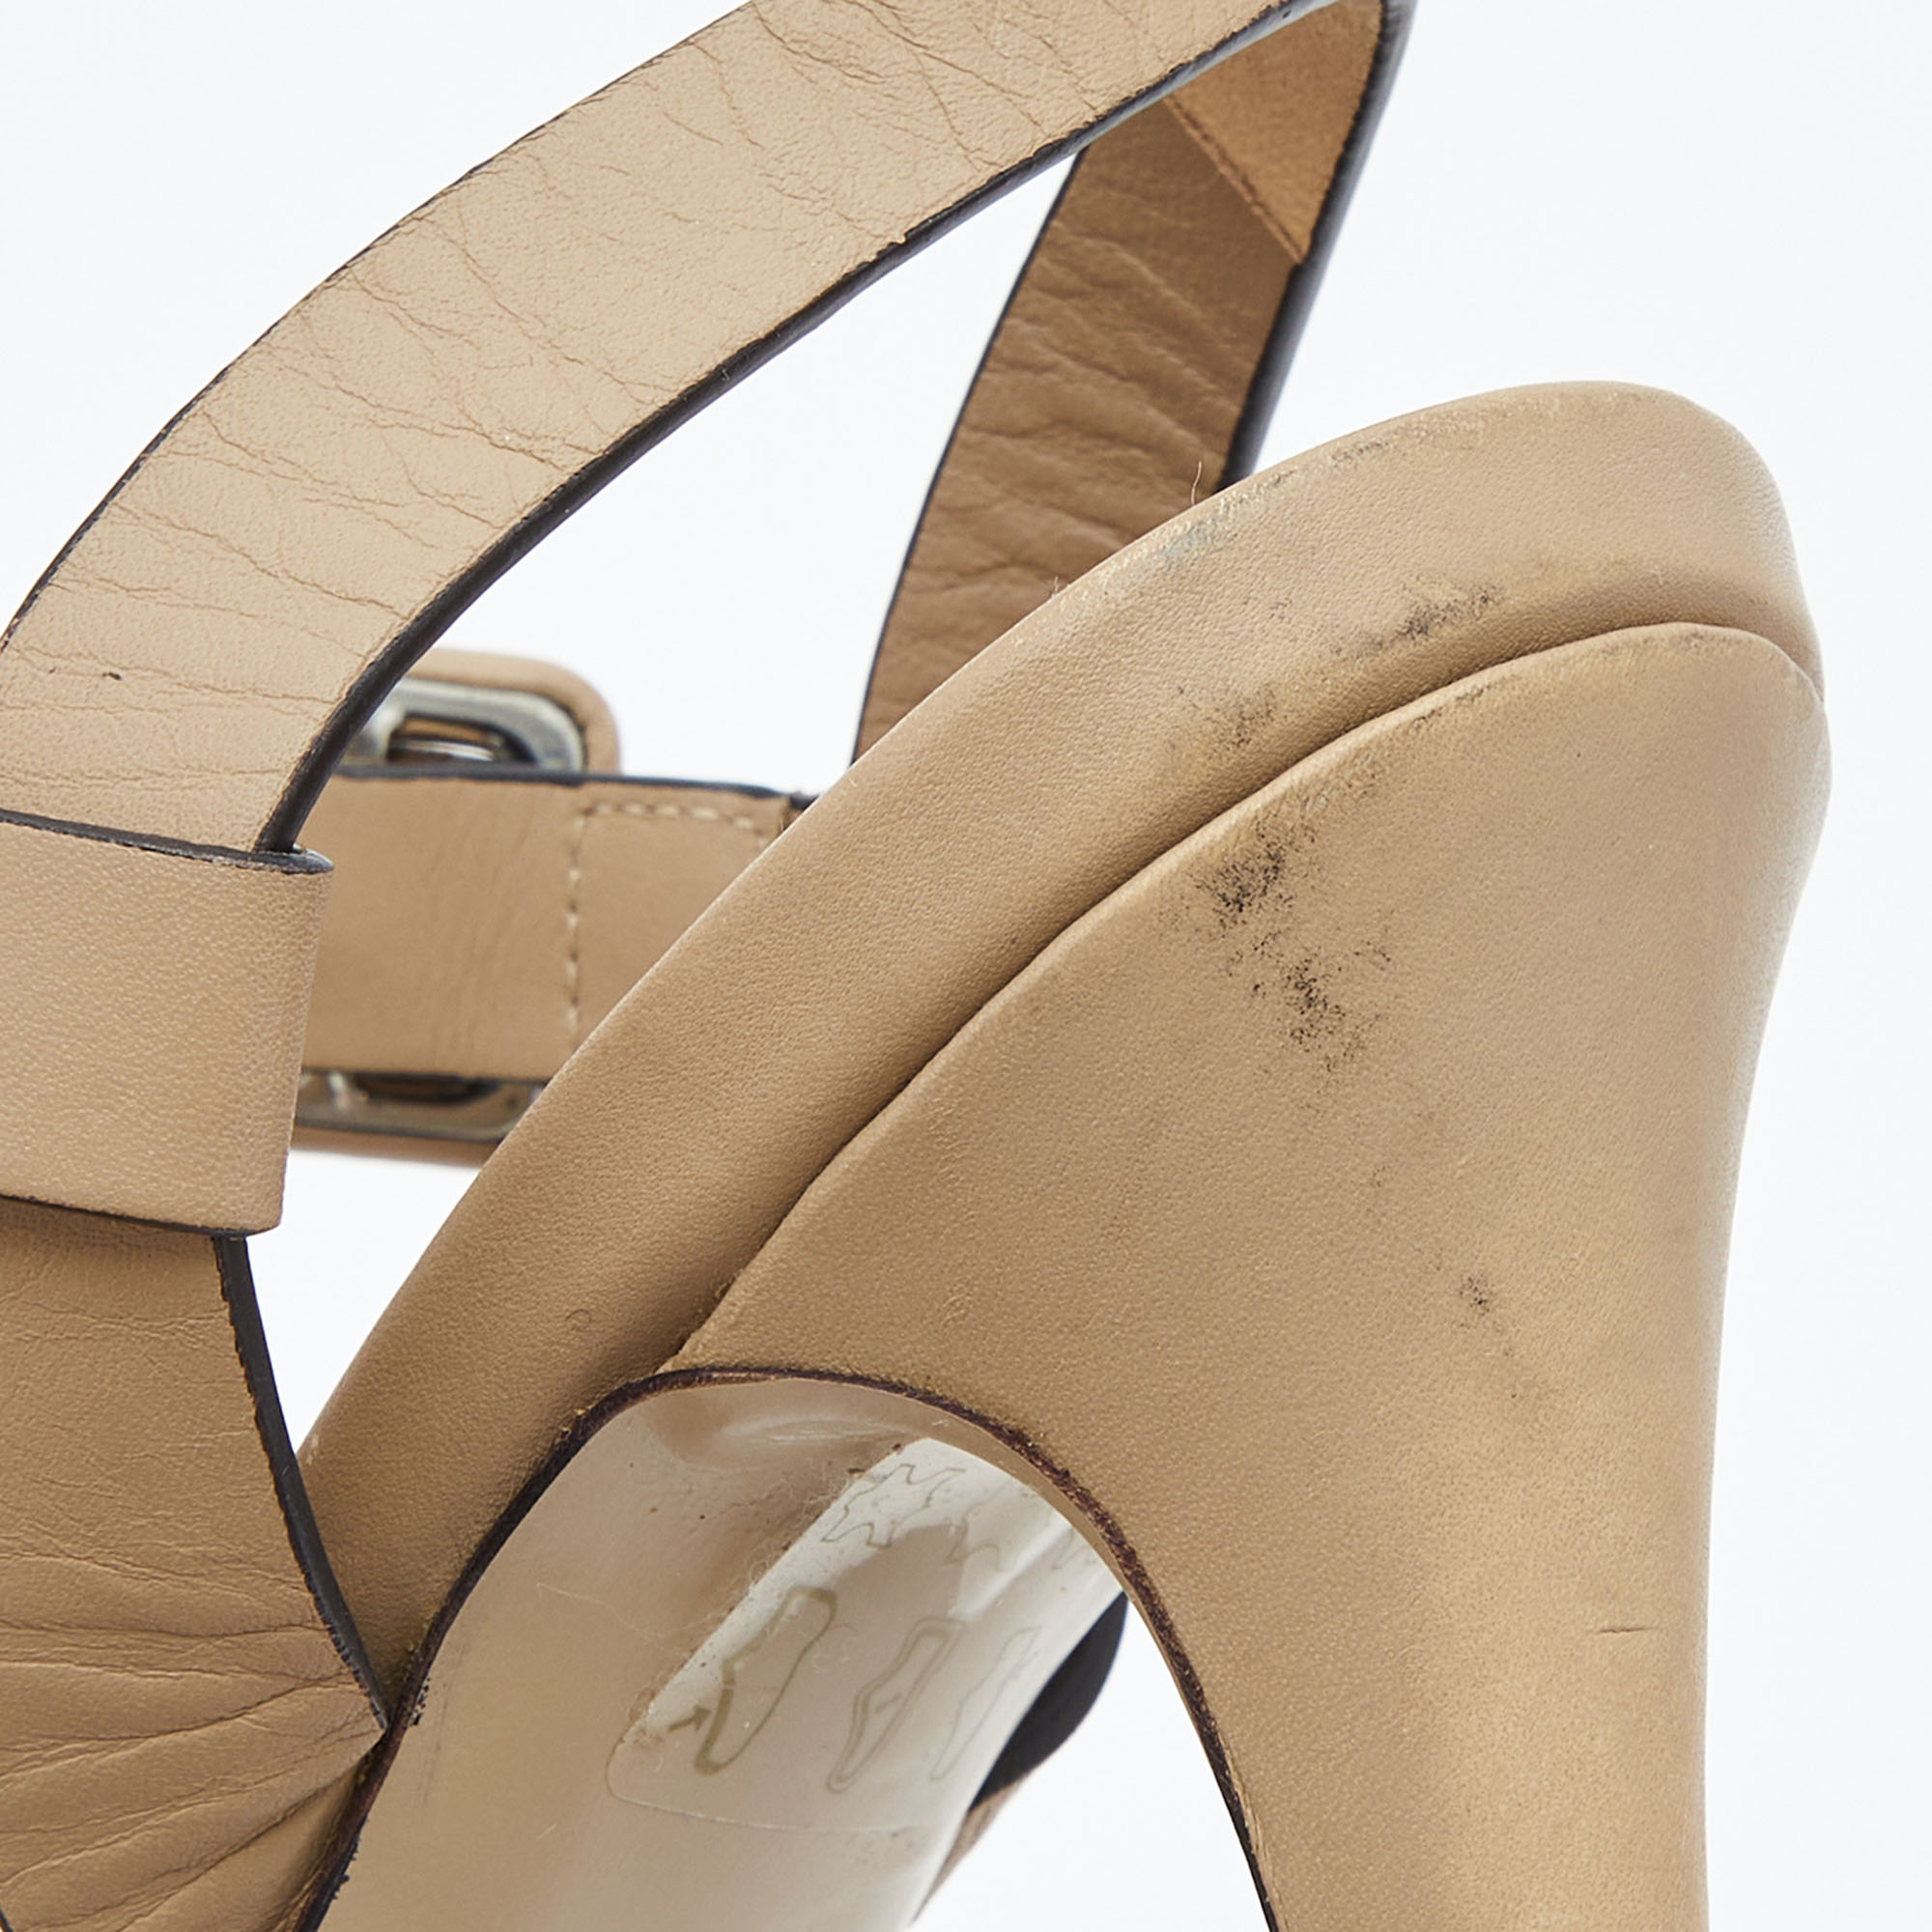 Le Silla Beige Leather Platform Ankle Strap Sandals Size 37